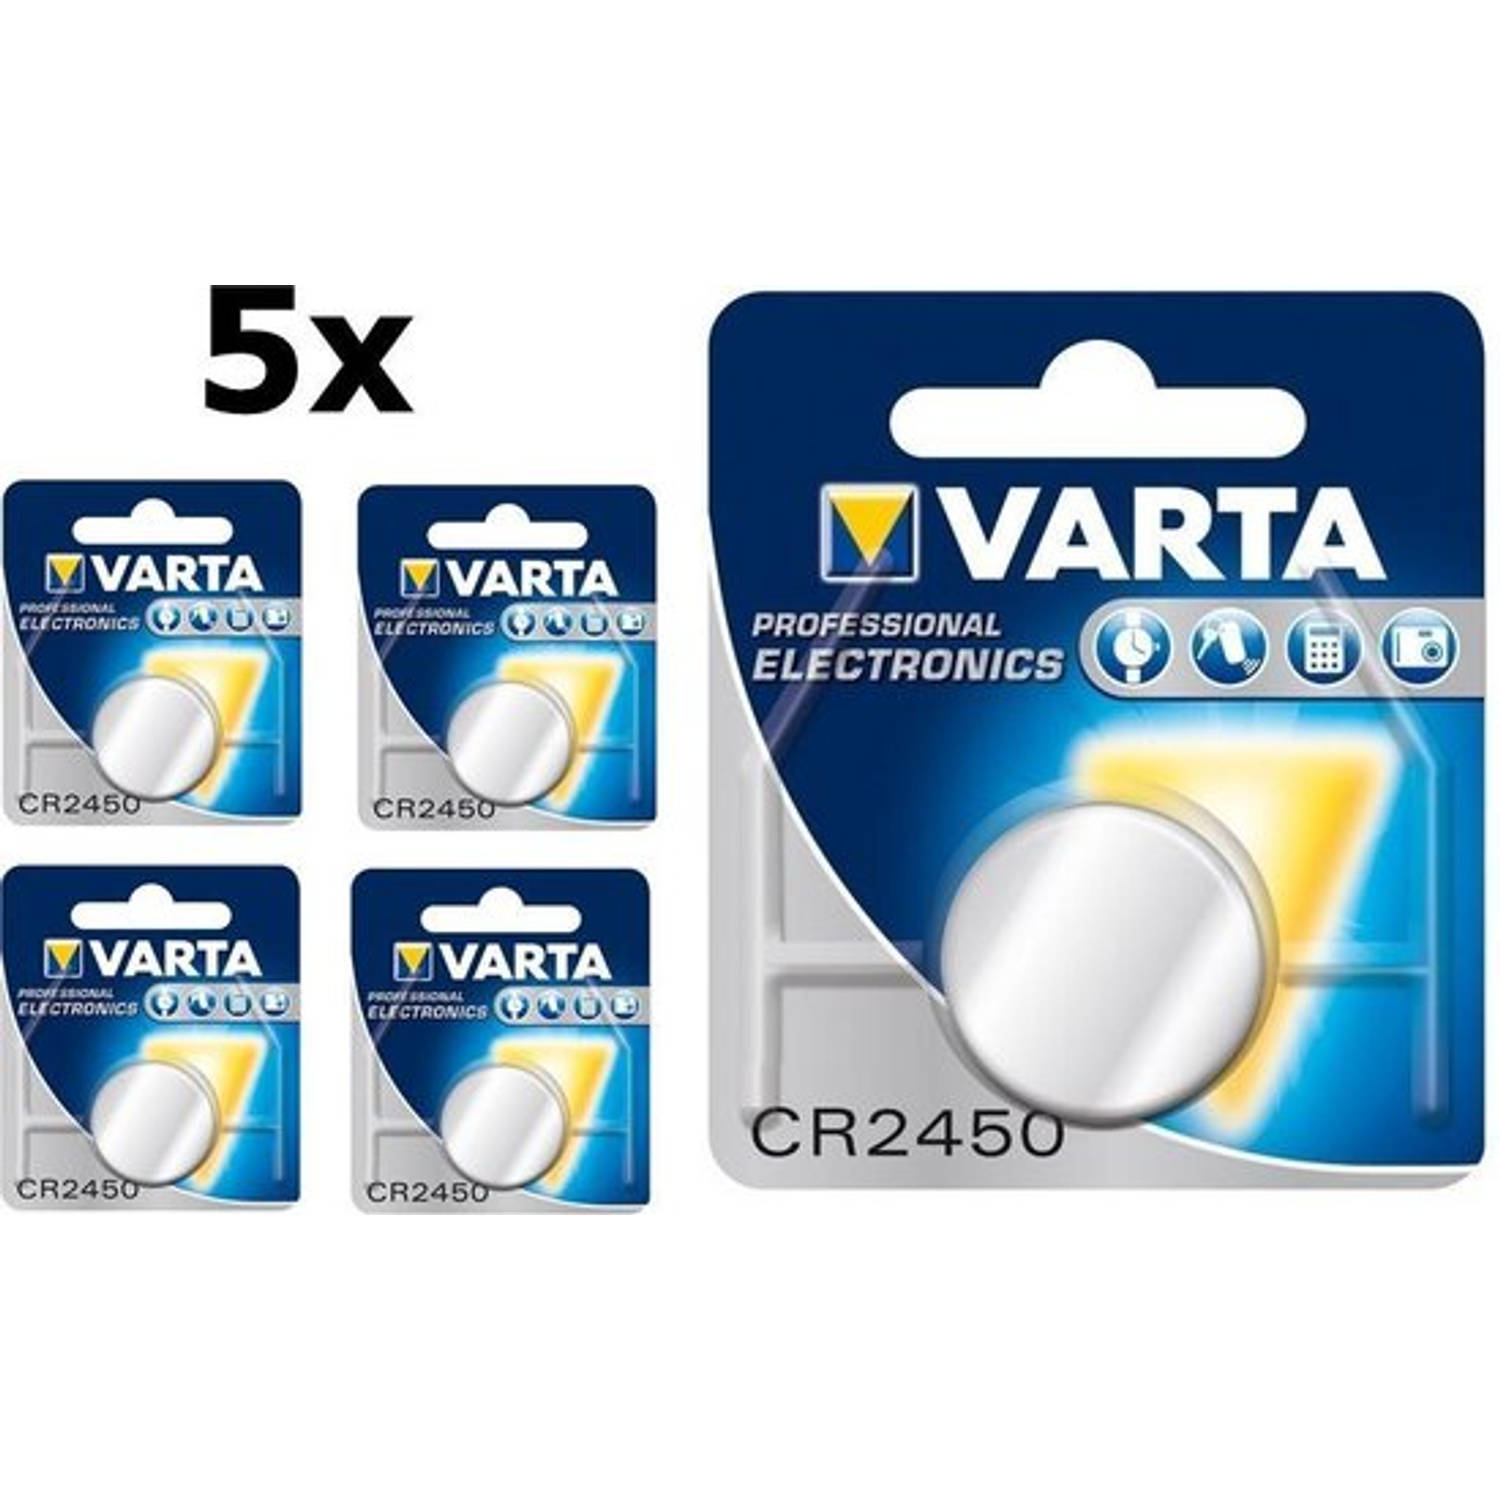 5 Stuks Varta Cr2450 3v 560mah Professional Electronics Lithium Knoopcel Batterij